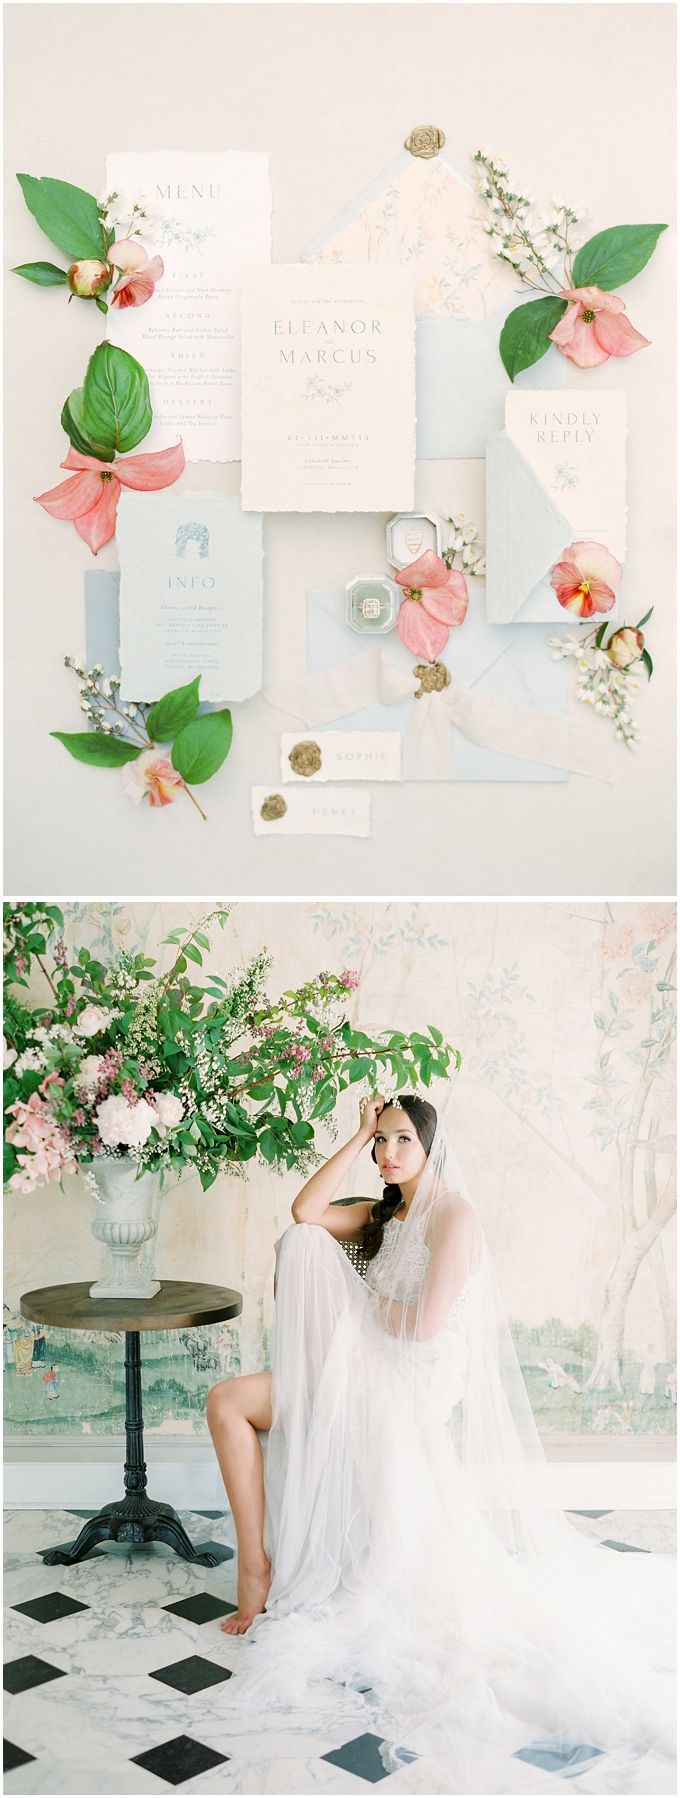 custom wedding invitation by floraison design co at lakewold gardens